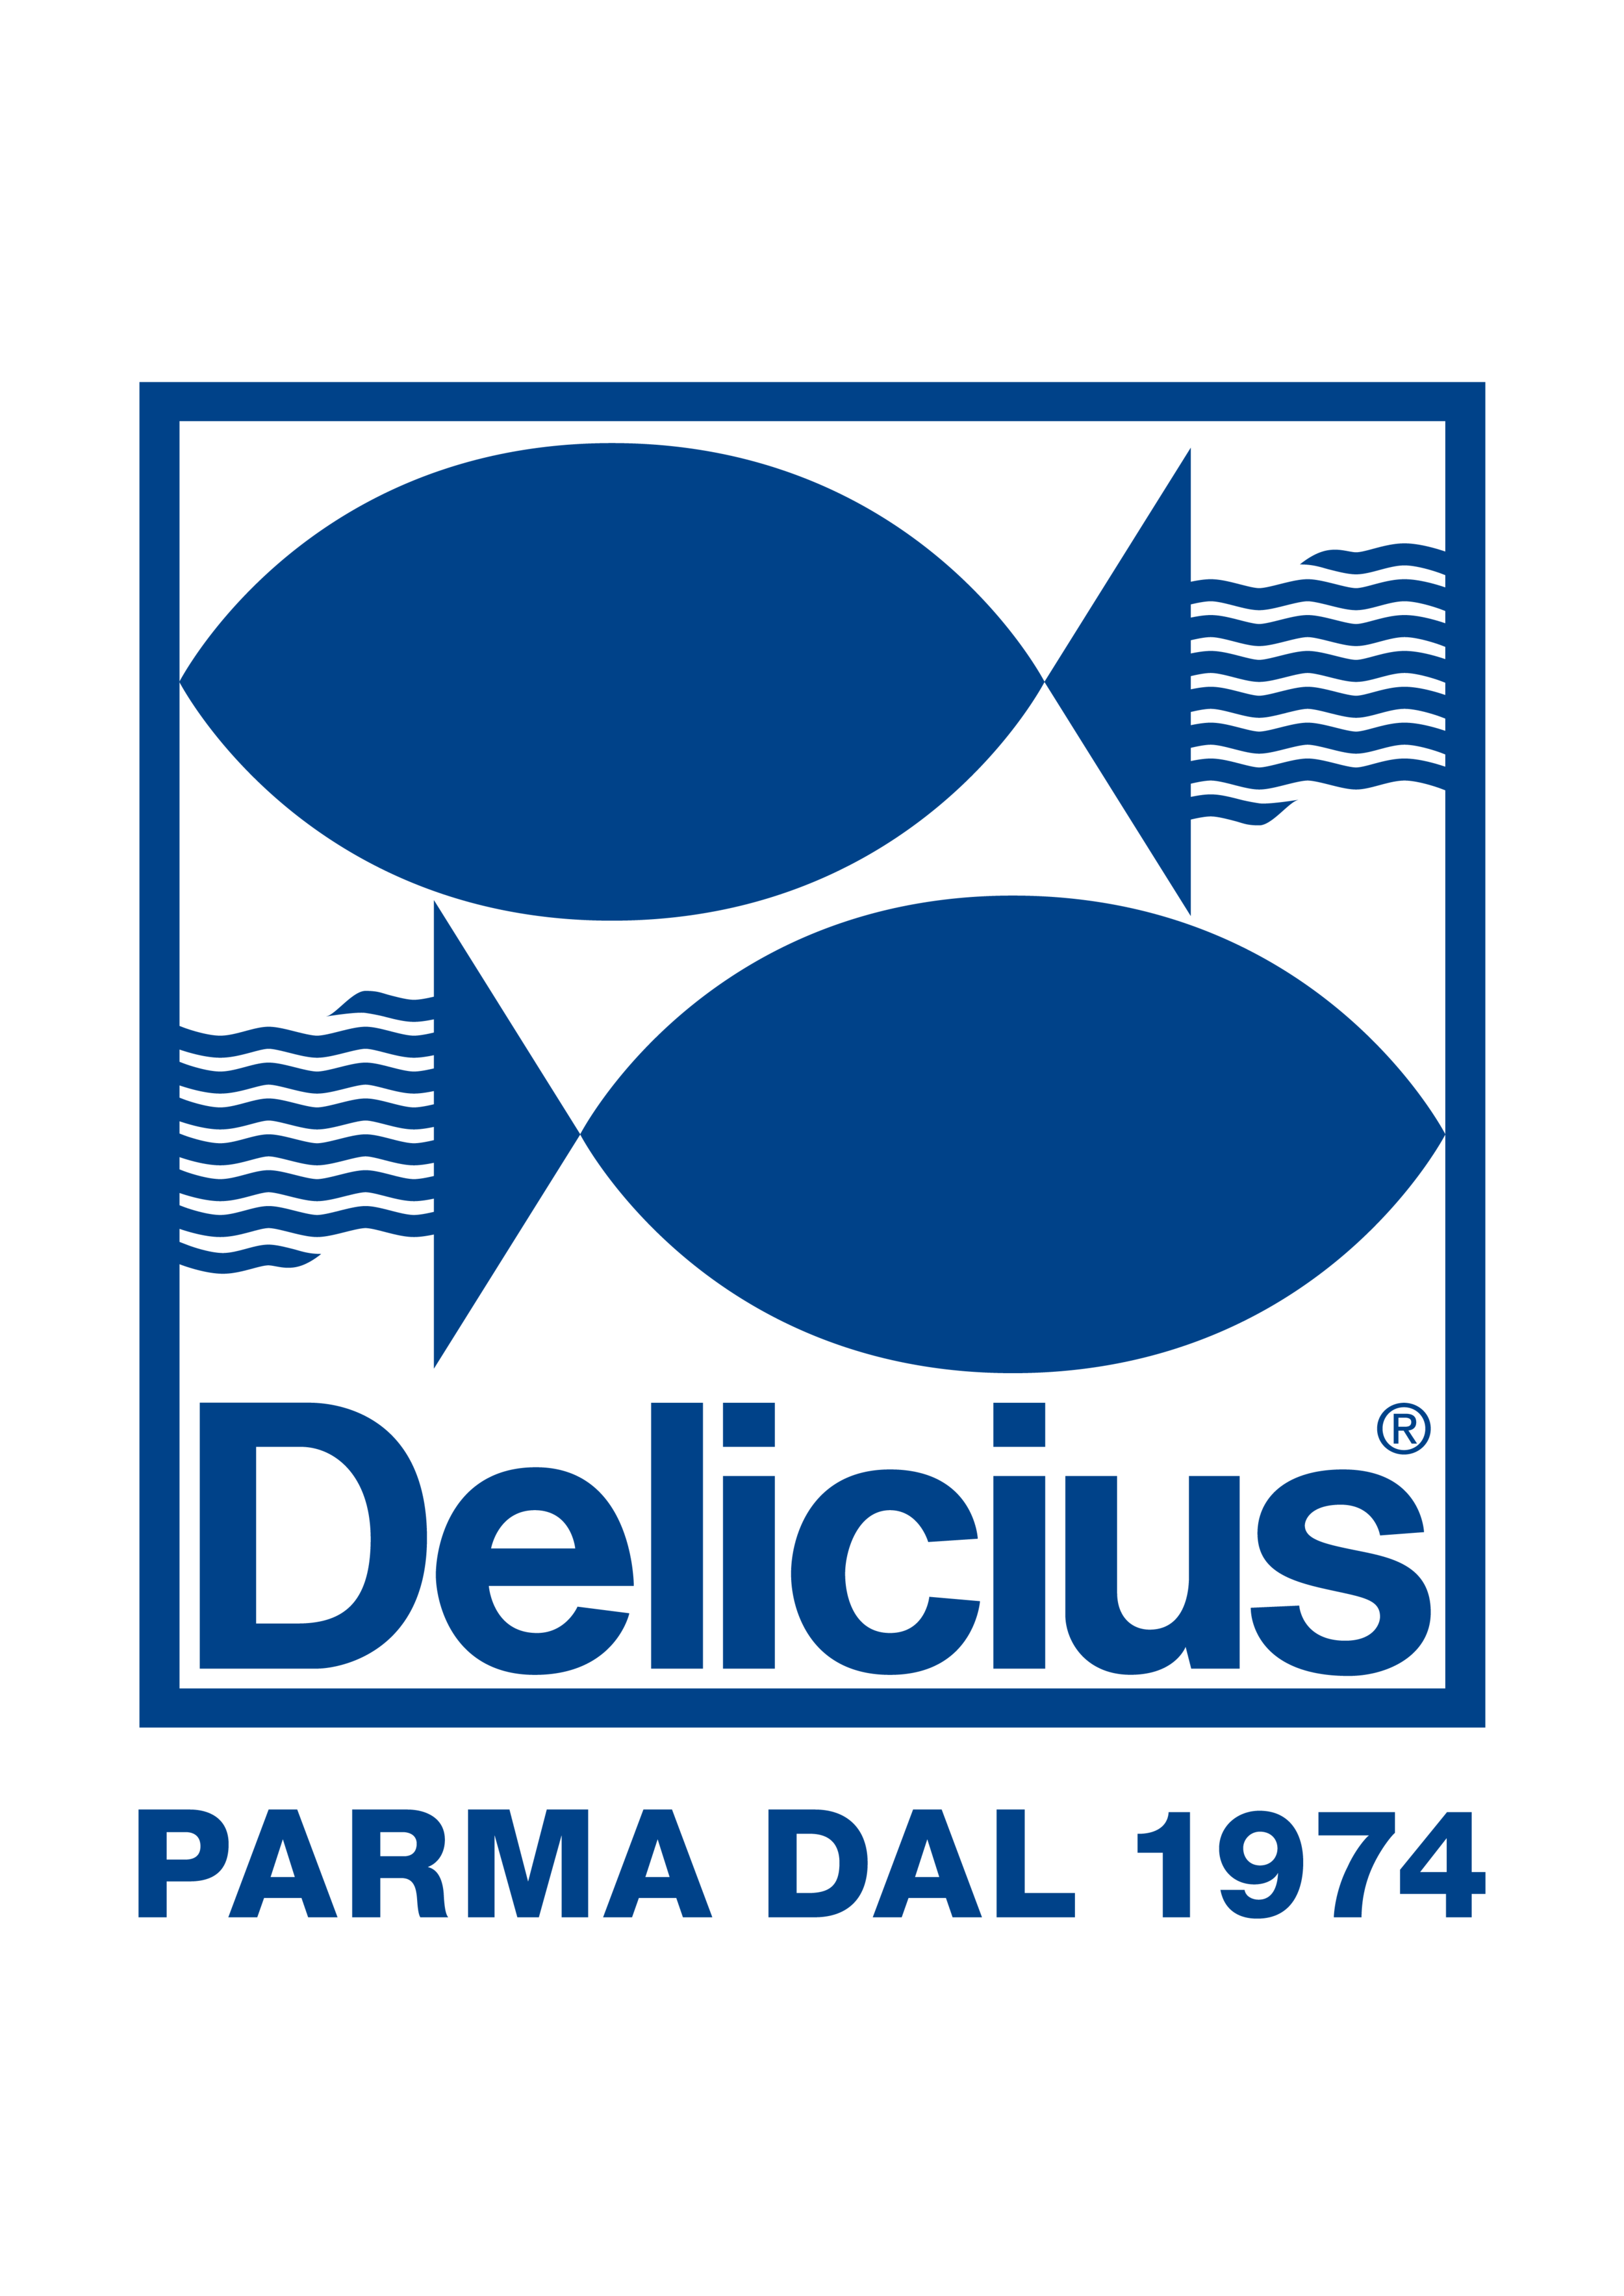 logo delicius - png format.png